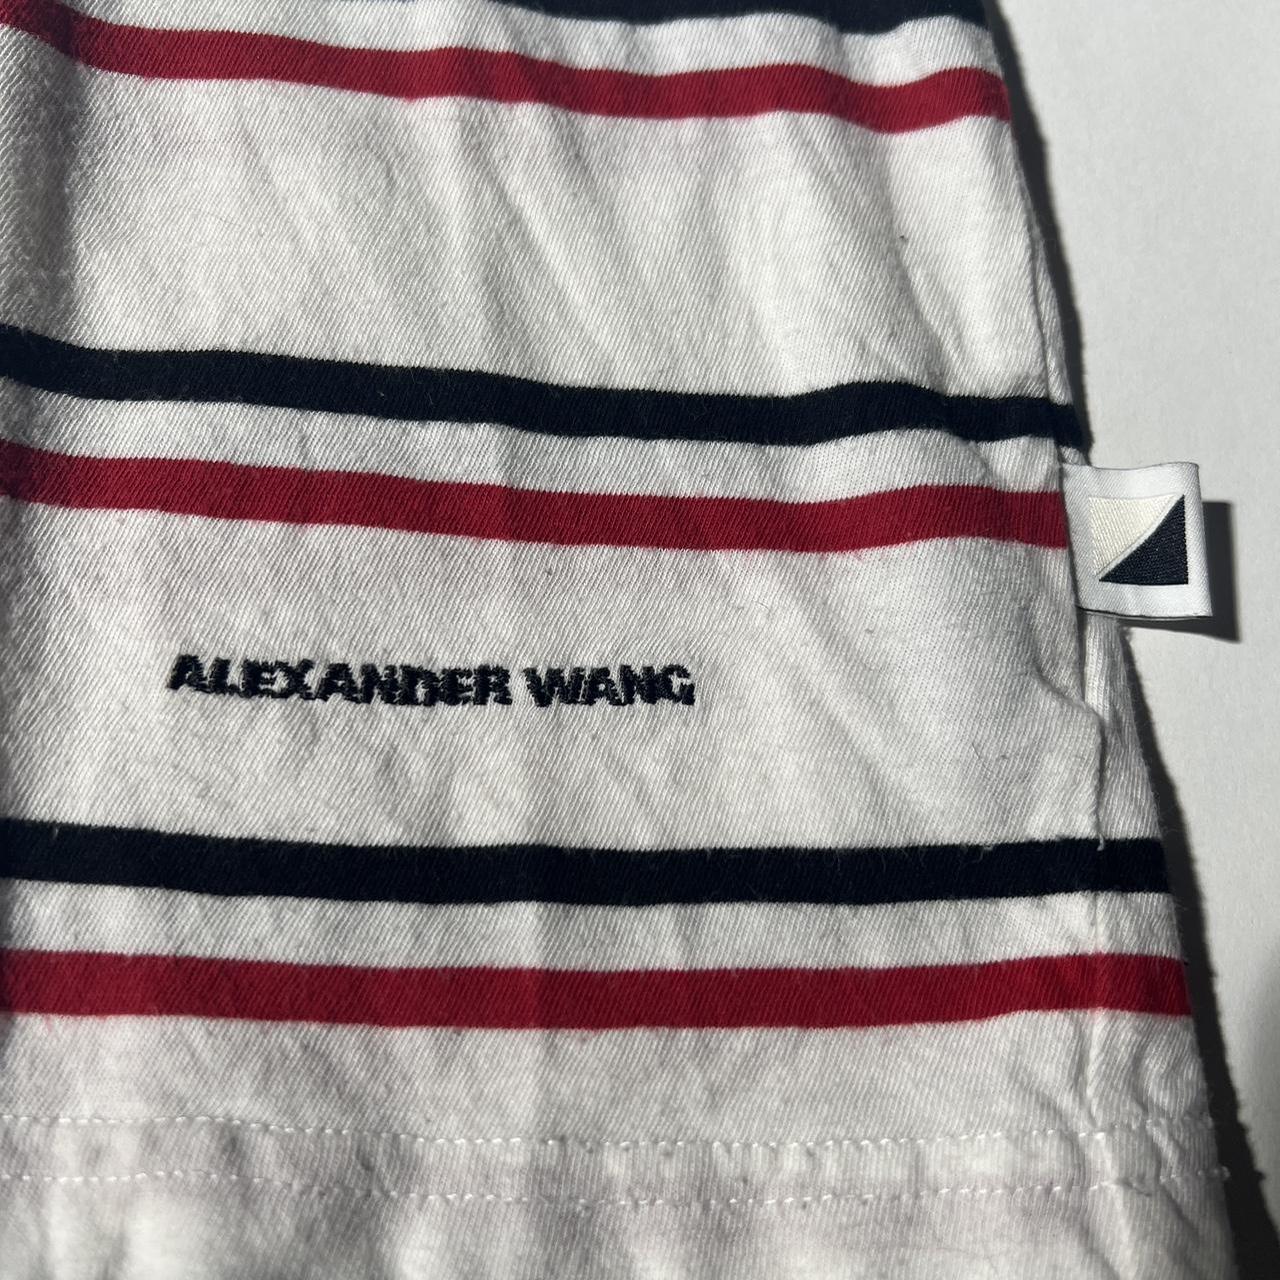 Alexander Wang Men's Red and Black Shirt - 3